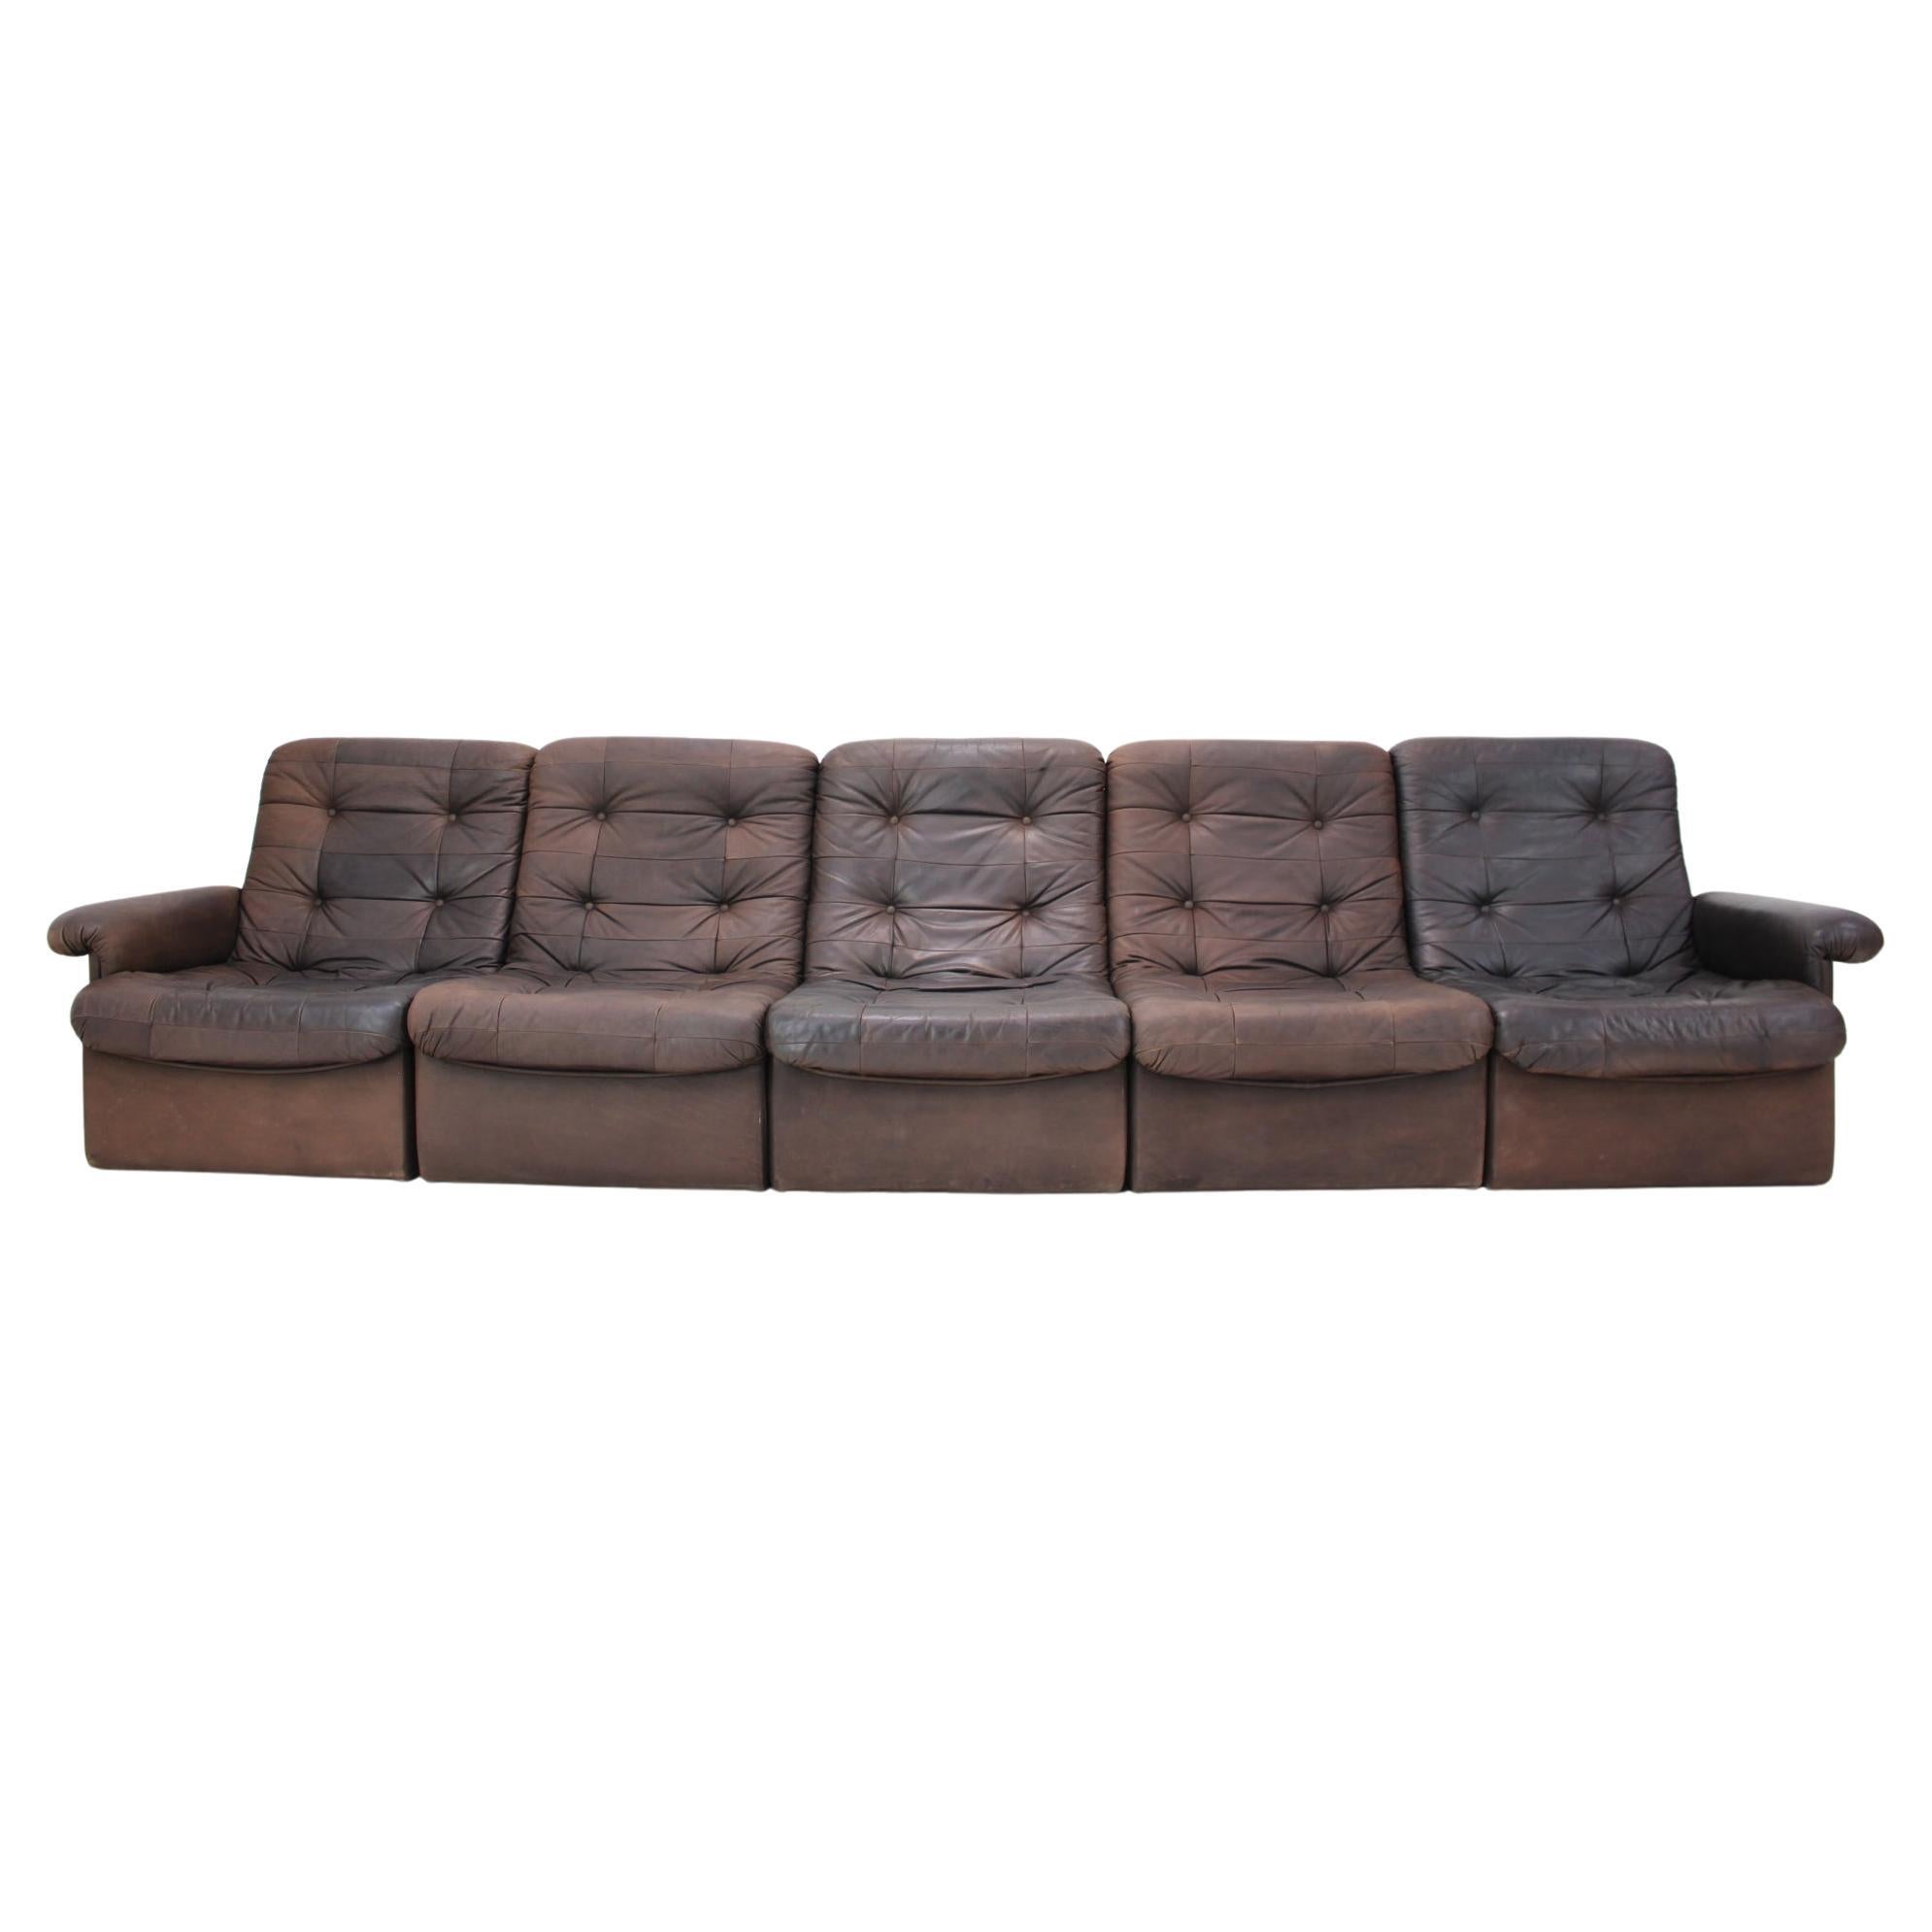 1980s Leather Modular Five Seater Sofa